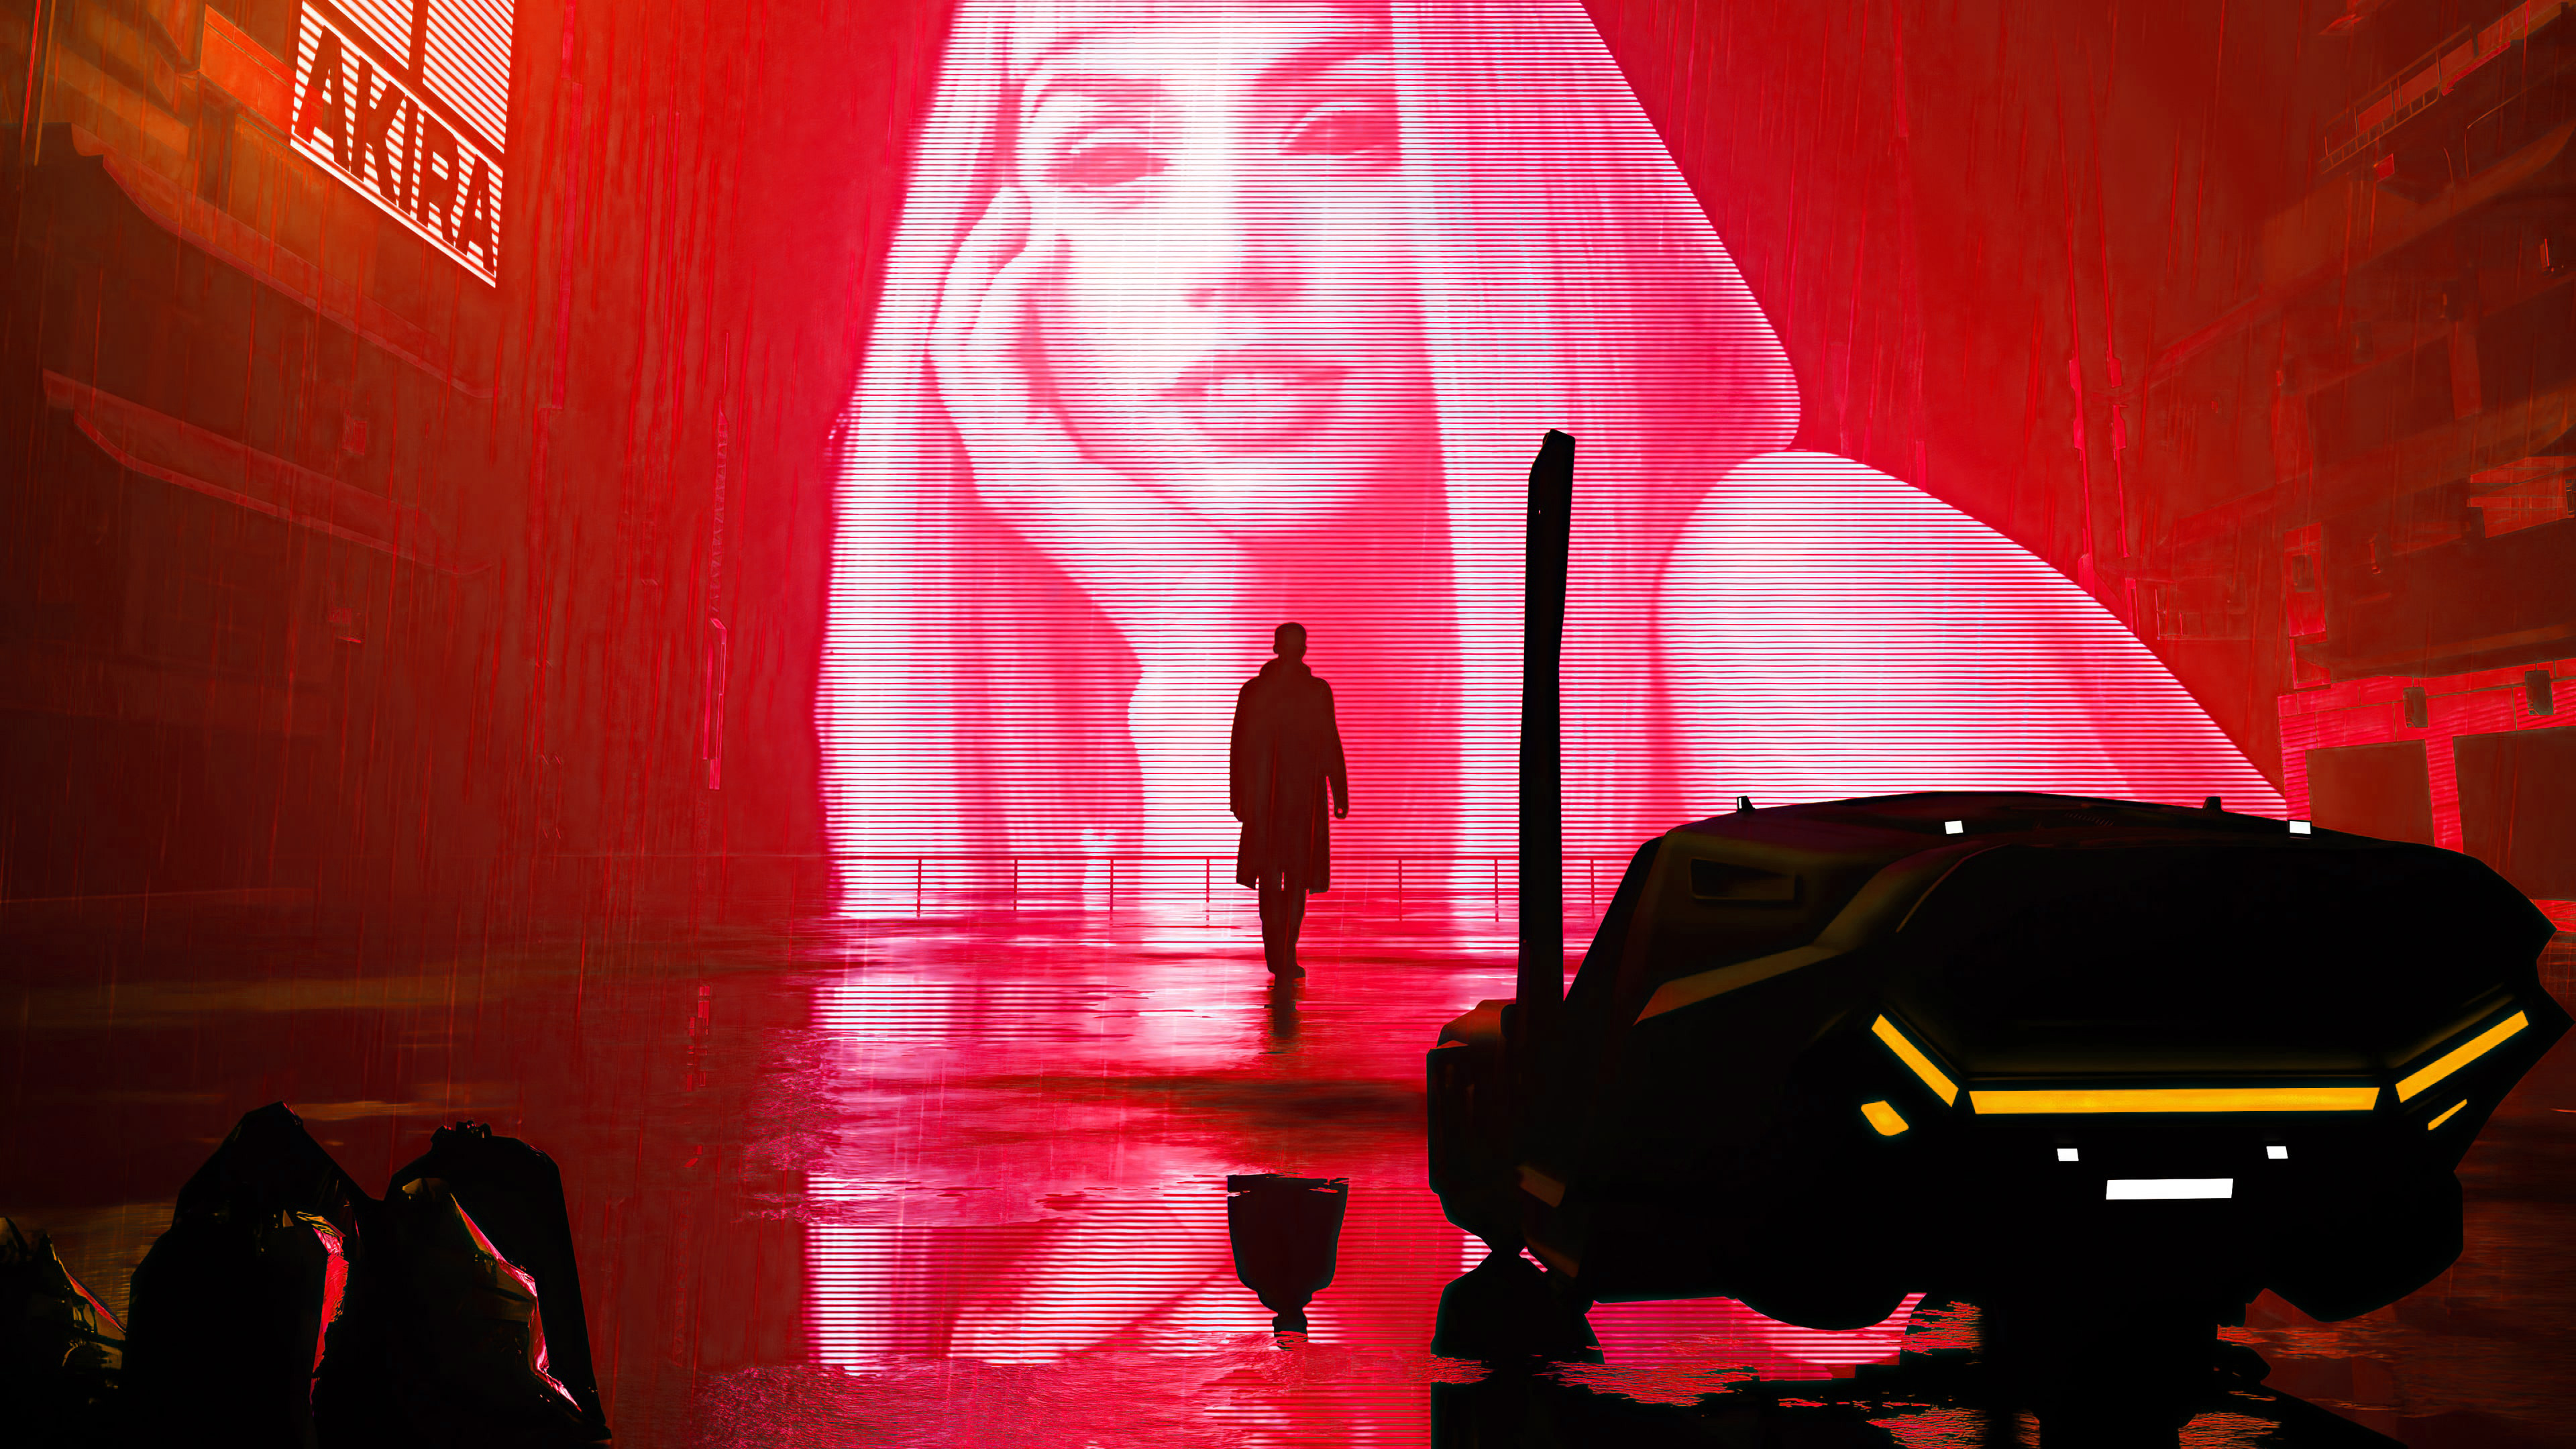 Blade Runner 2049 Wallpaper